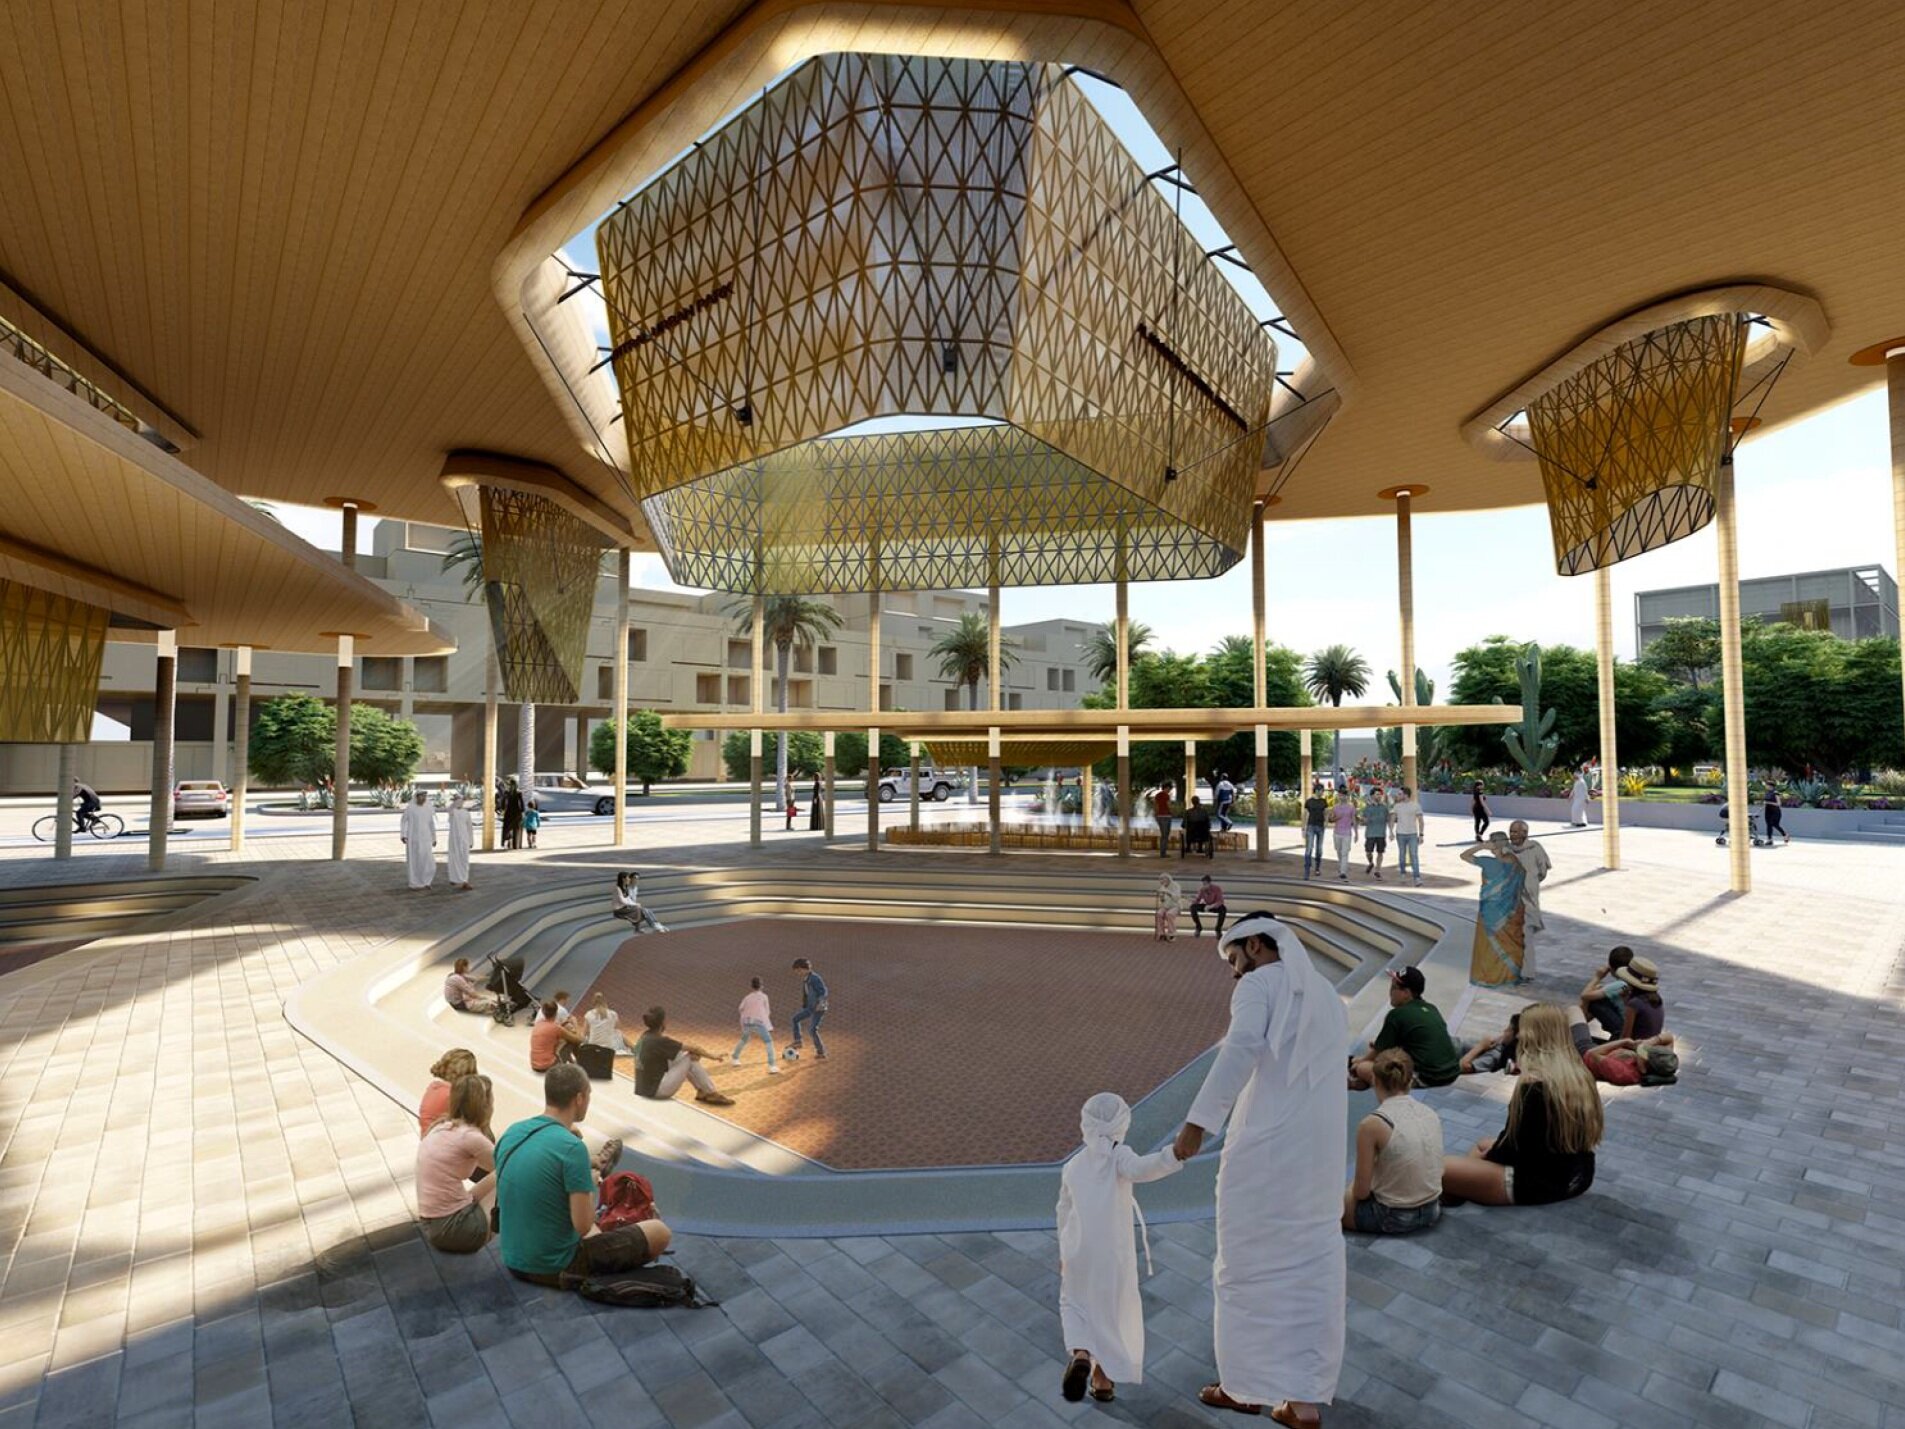 View of the pavilion of the central park (day), Al Nasserya Urban Regeneration / Central Park, Mariama Kah, American University of Sharjah, 2019, Sharjah, Image courtesy of Mariama Kah.